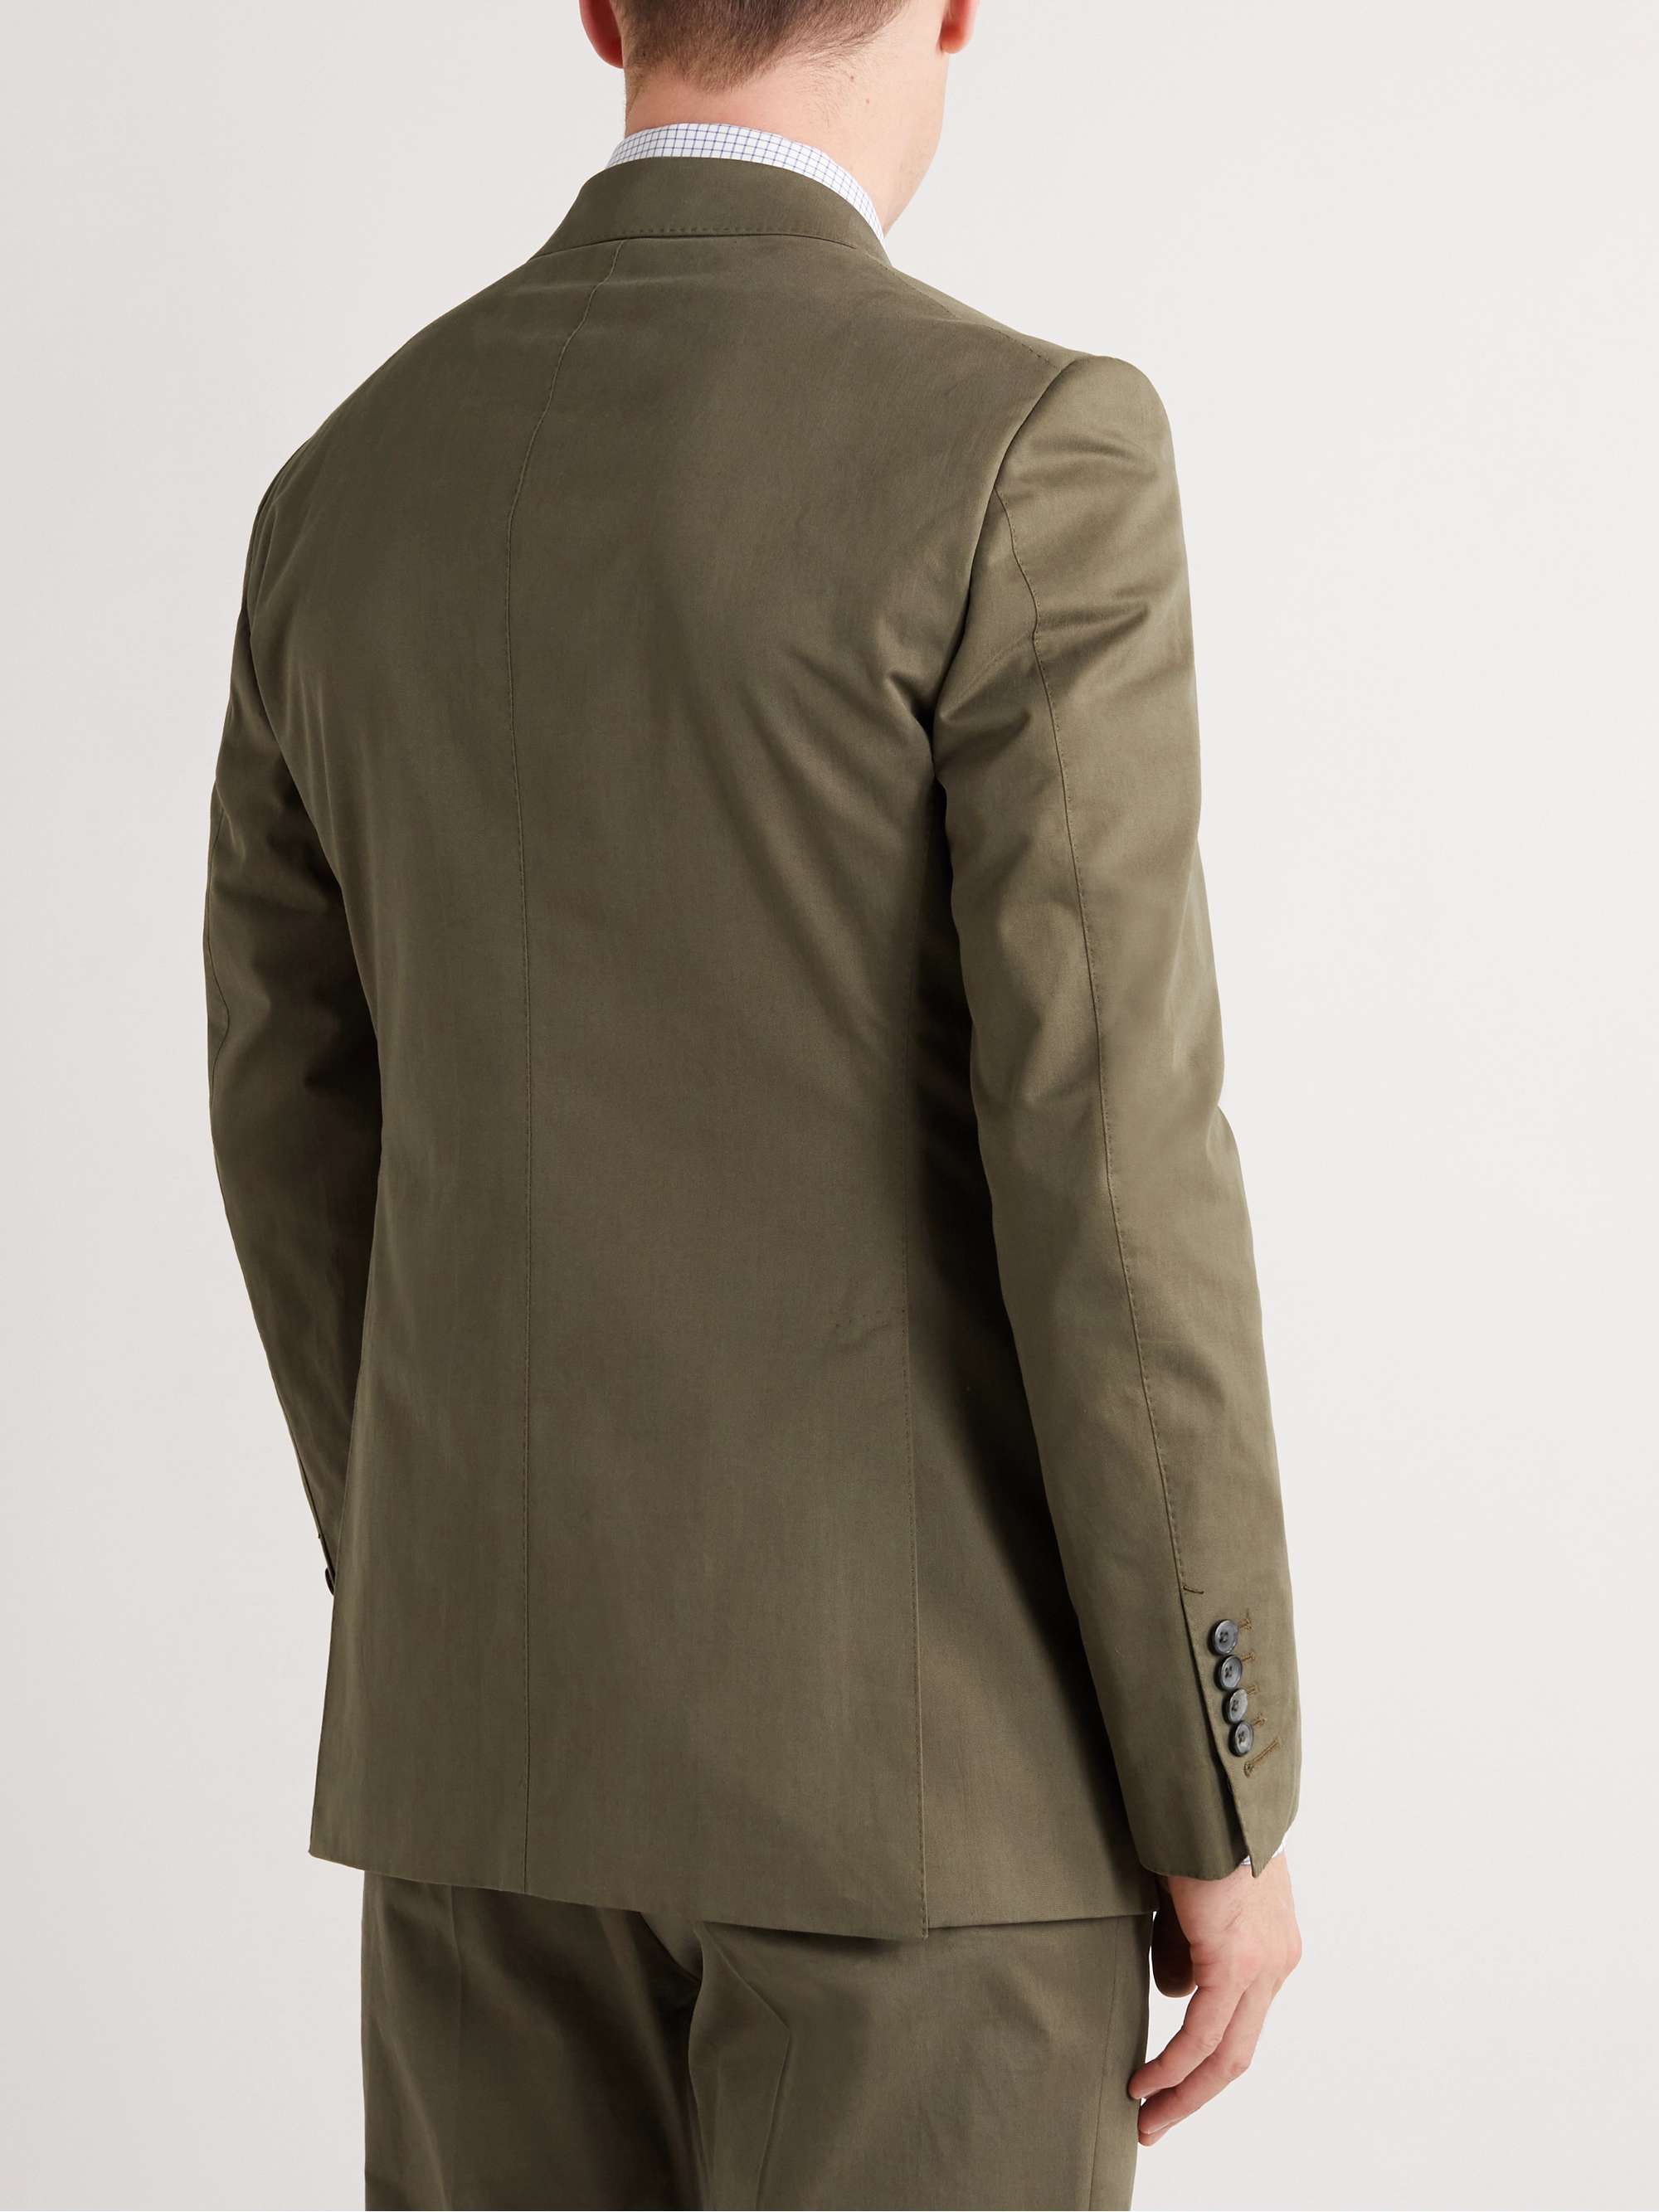 TOM FORD Shelton Slim-Fit Cotton-Blend Twill Suit Jacket